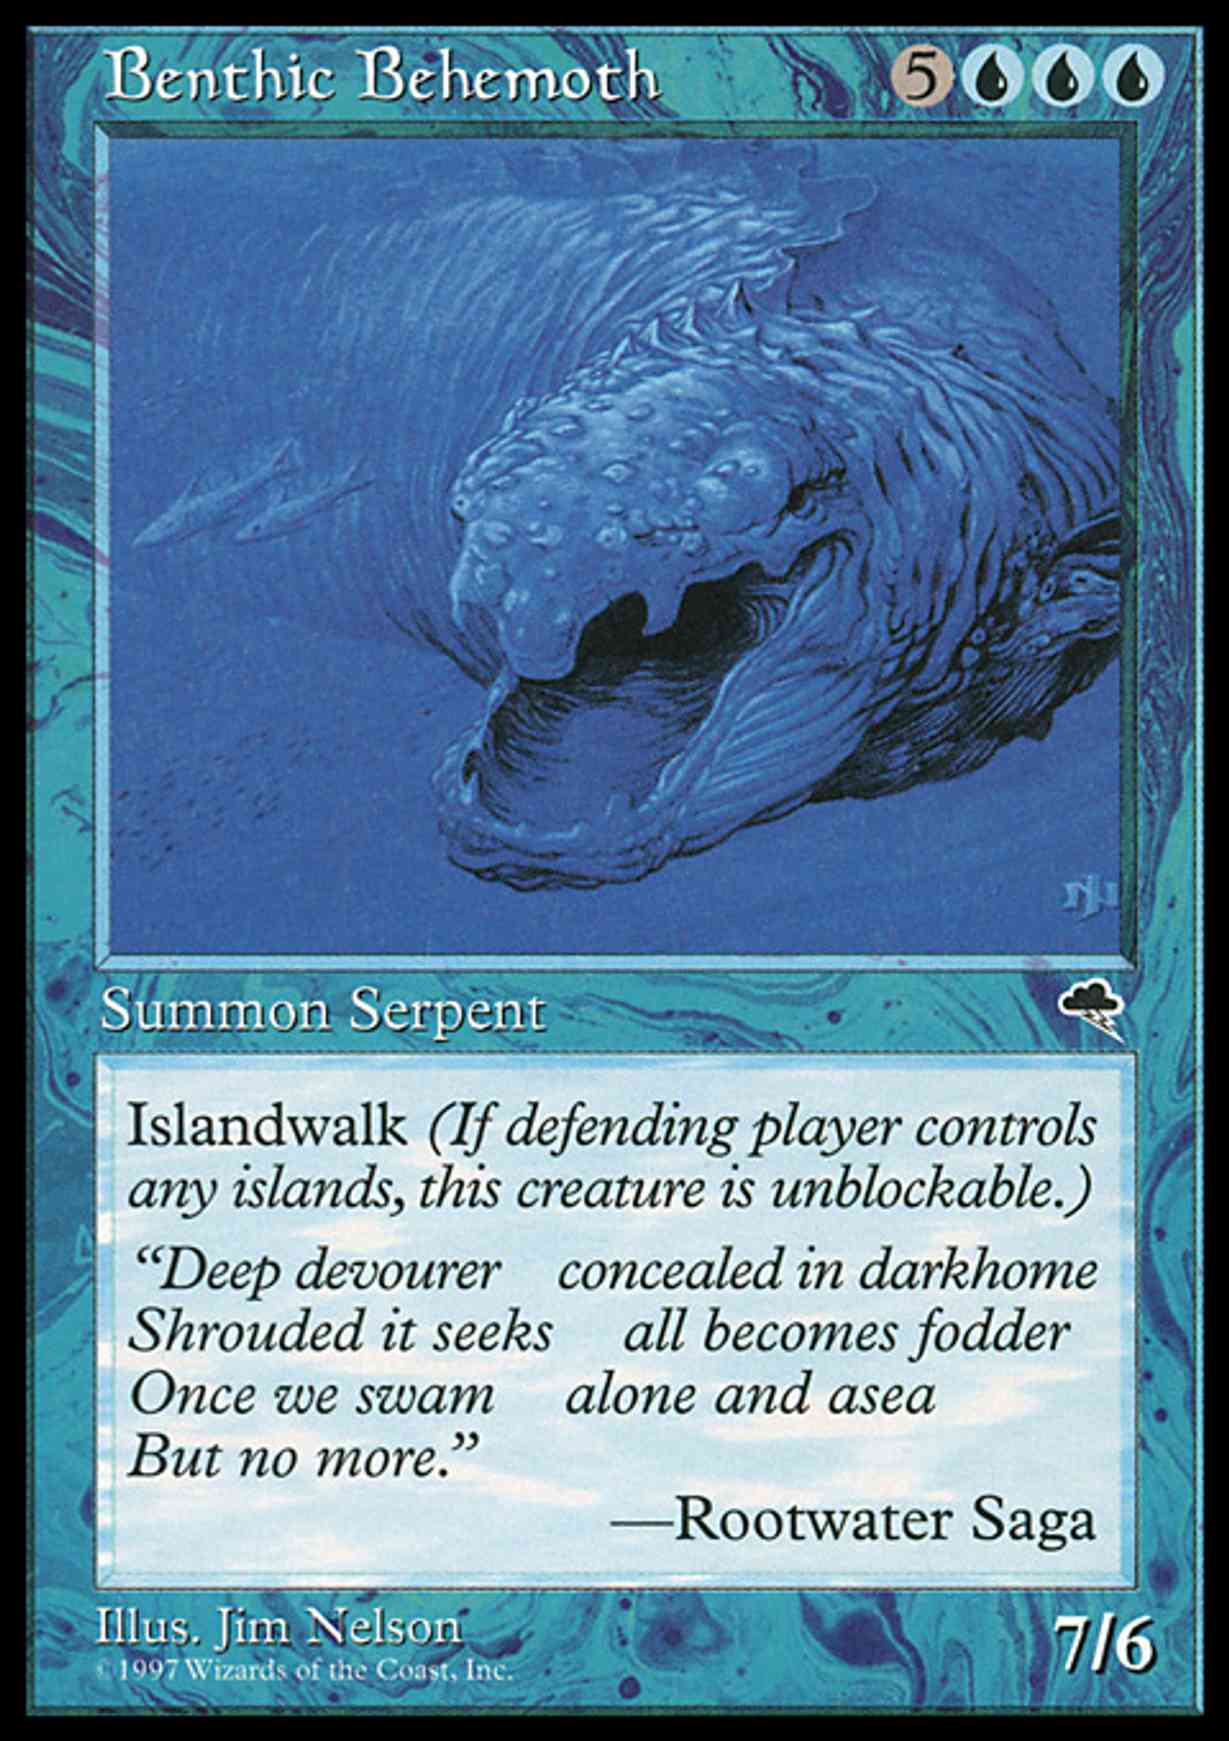 Benthic Behemoth magic card front